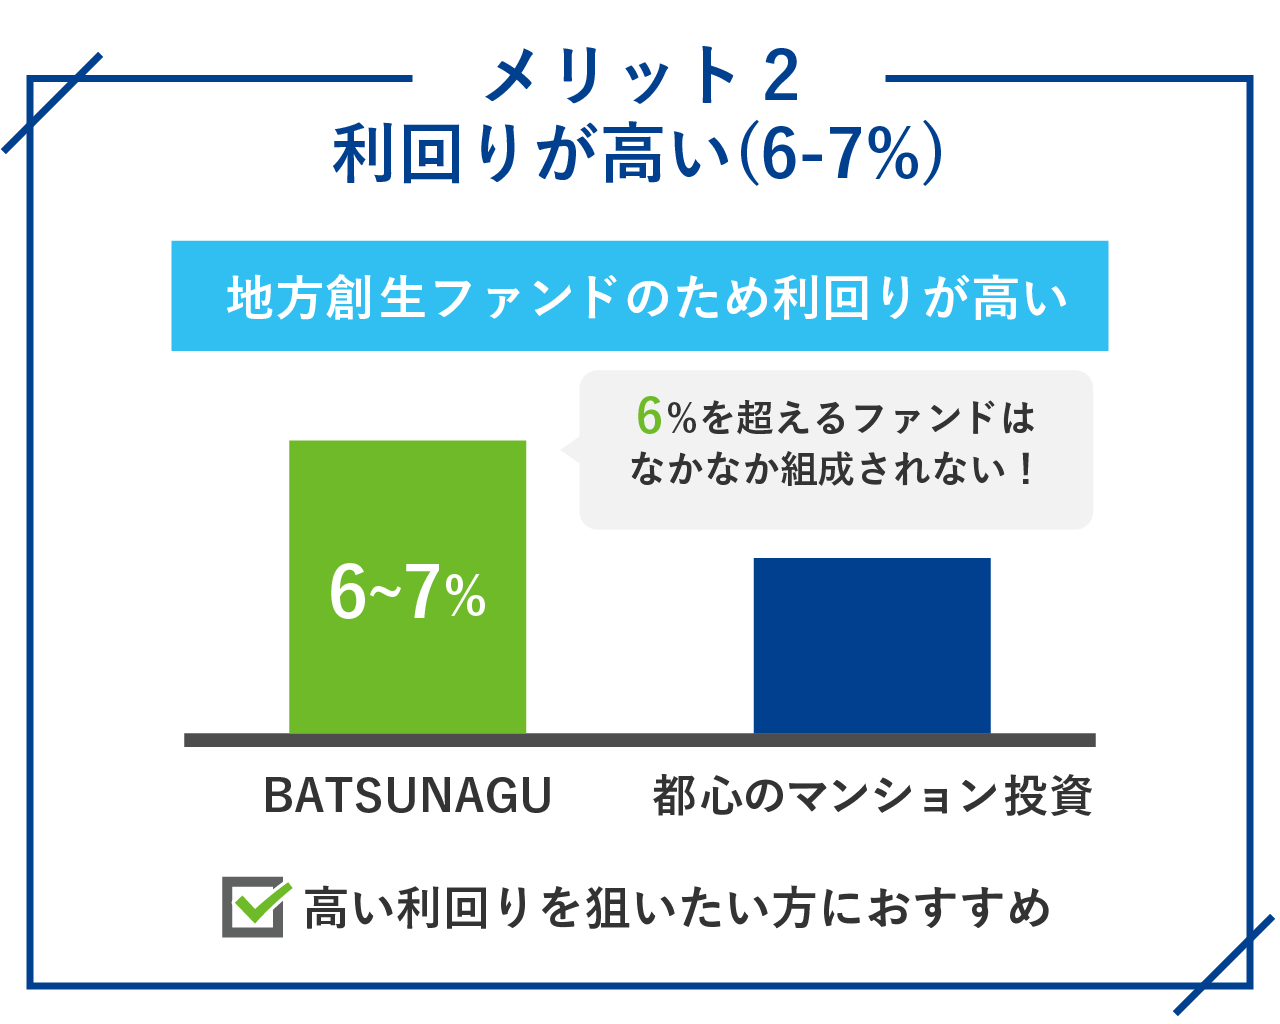 BATSUNAGUのメリット・特徴2.利回りが高い(6-7%)